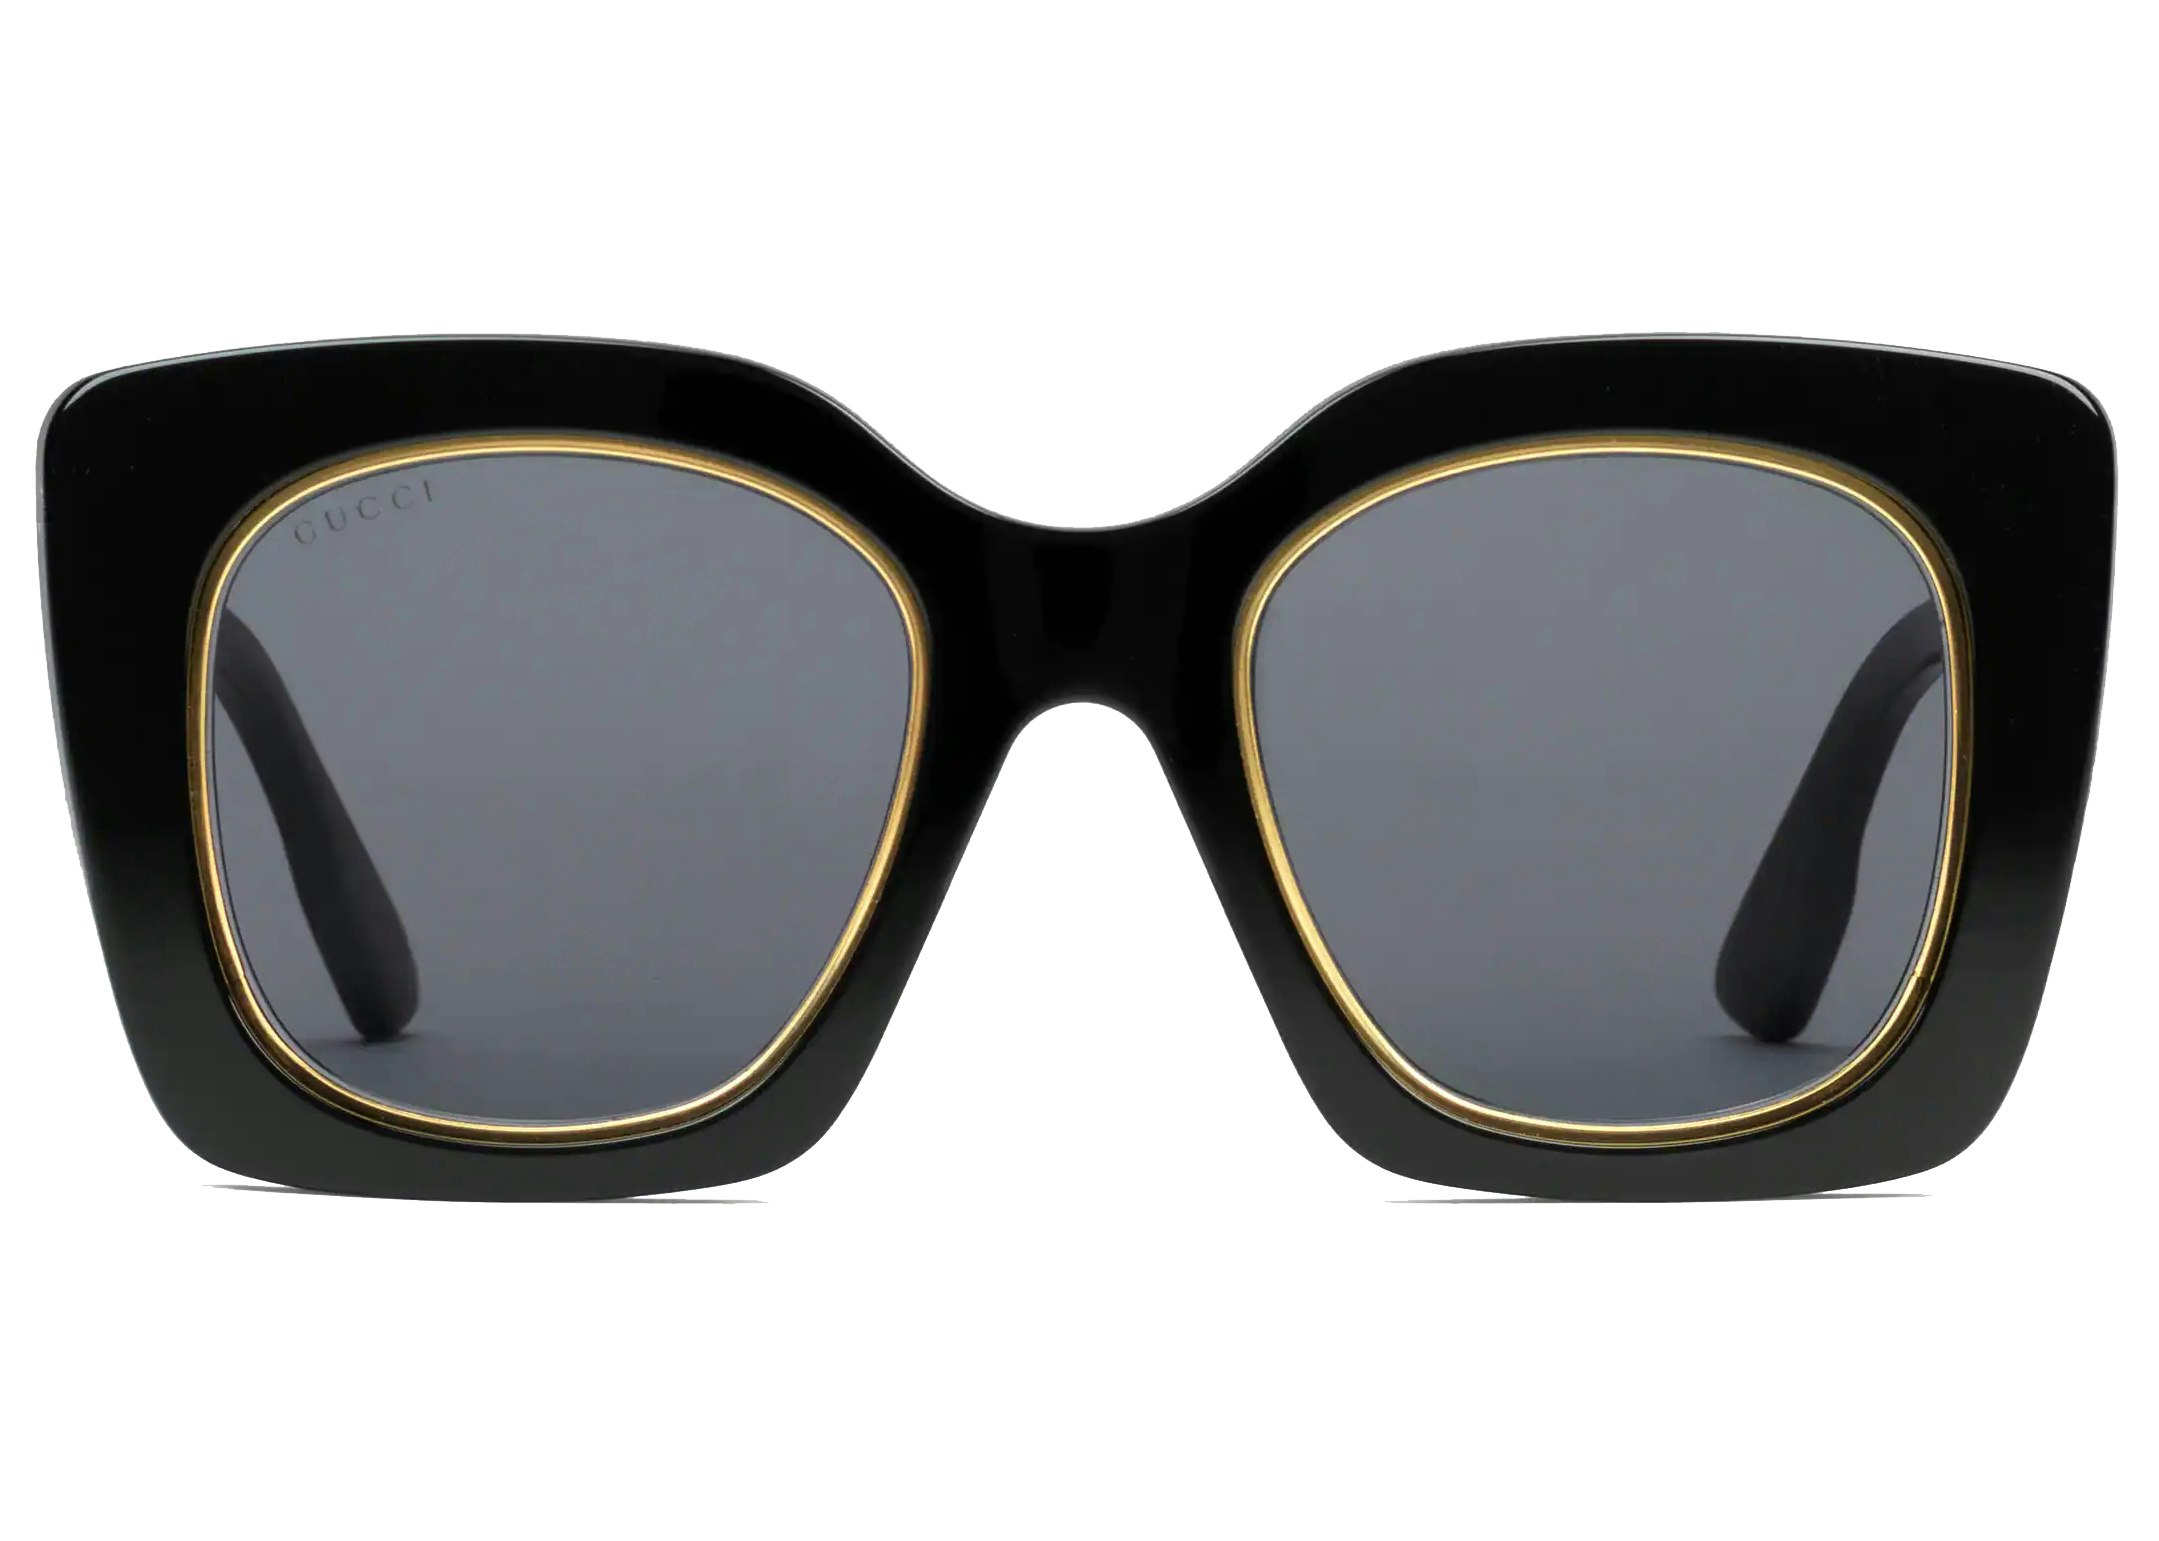 GUCCI Square-frame acetate sunglasses | Lentes gucci, Gucci, Lentes